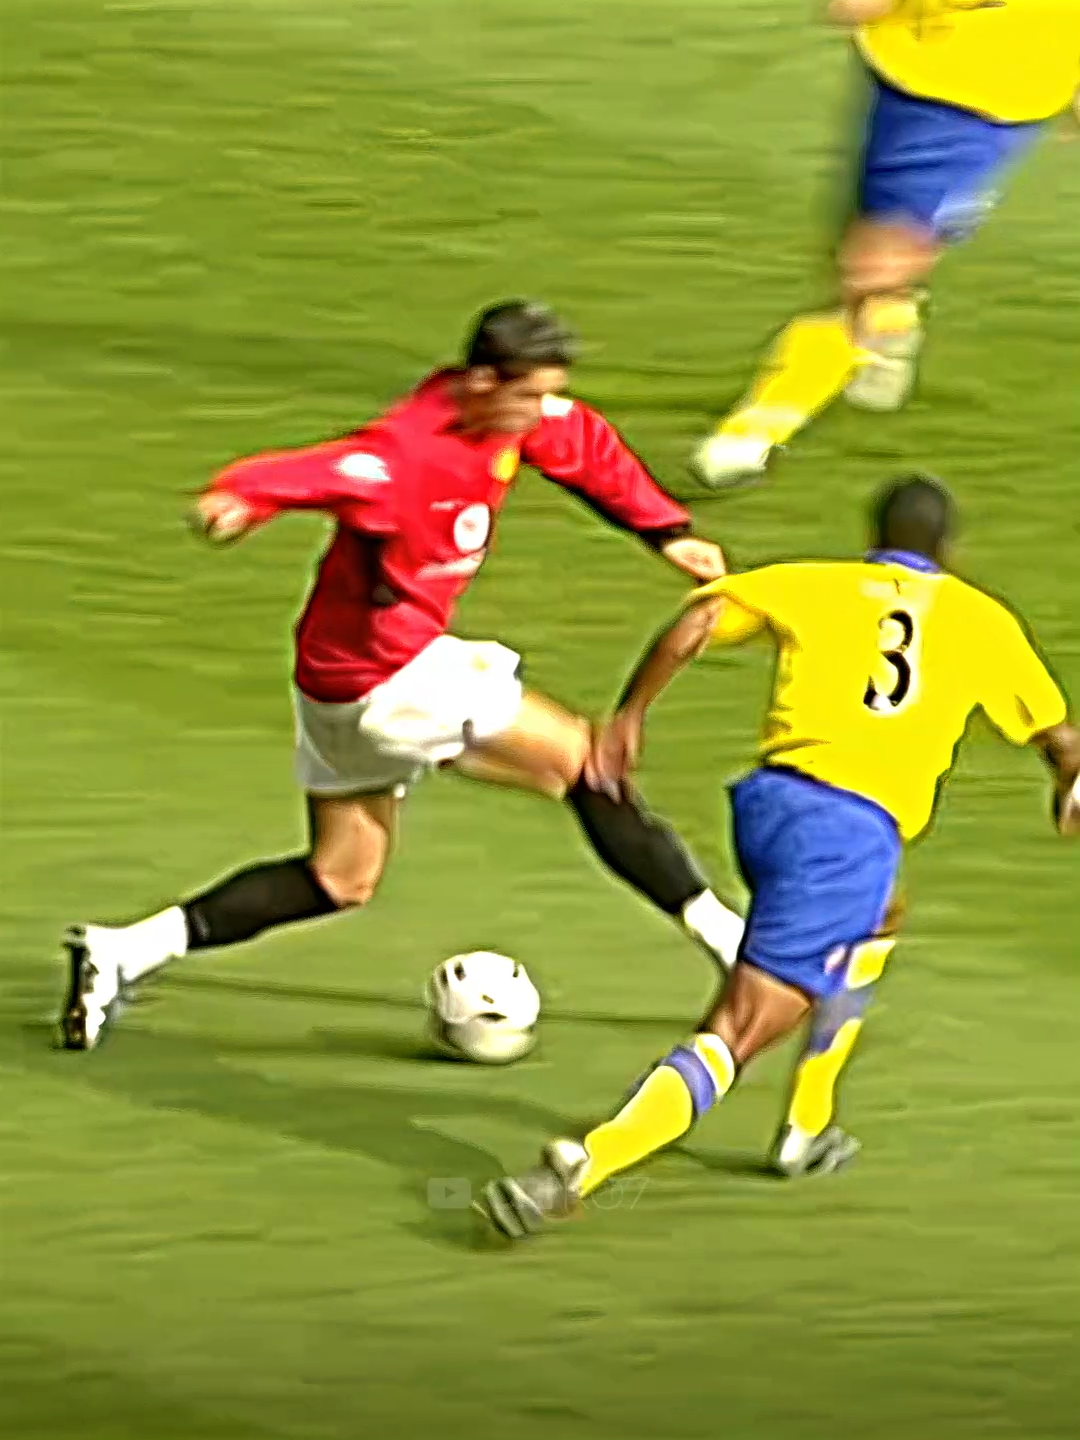 Young Ronaldo had too quick feet.. 🥶 #ronaldo